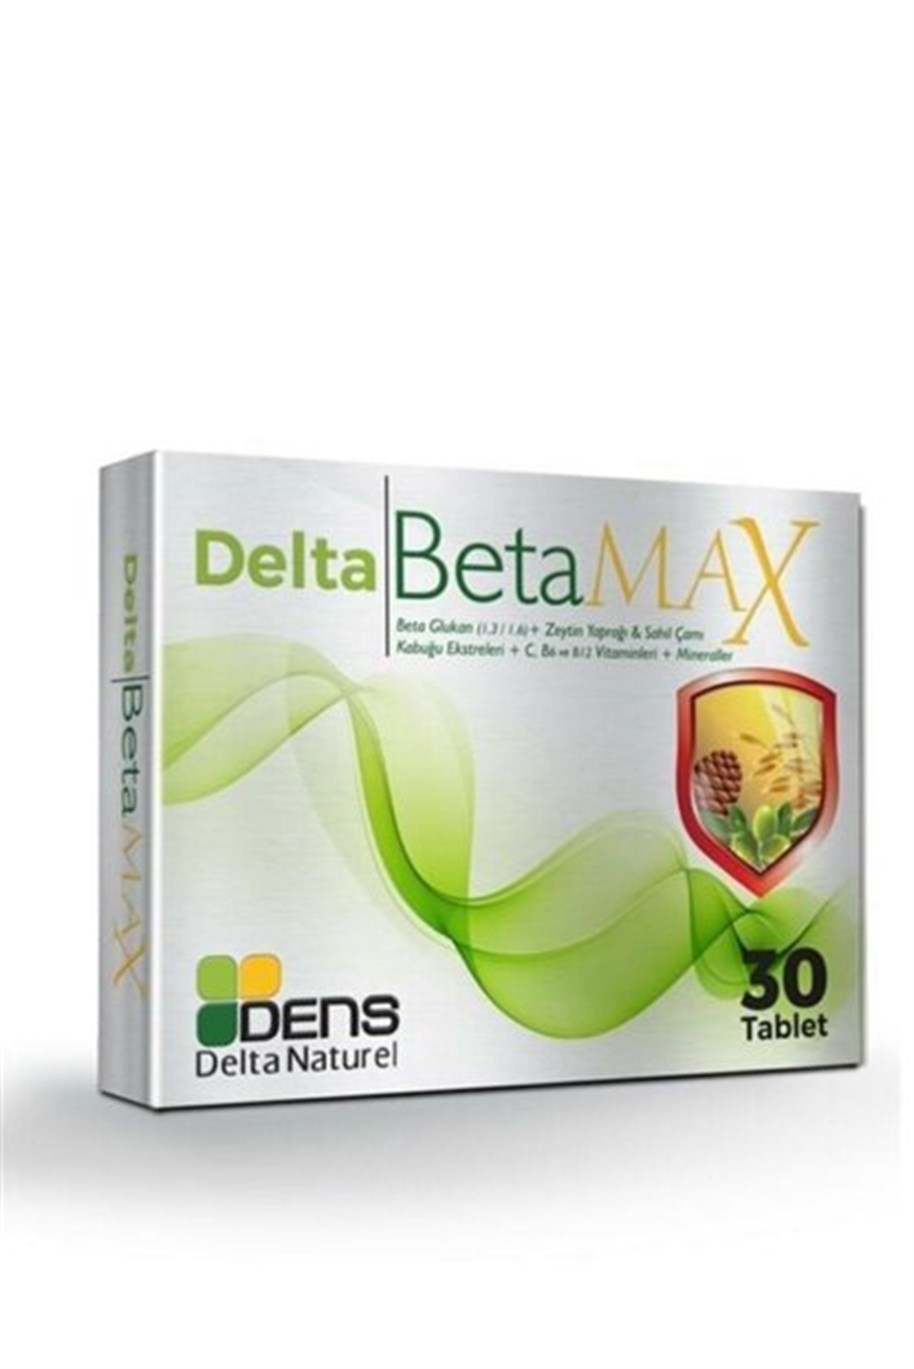 Delta Betamax 30 Tablet - 1